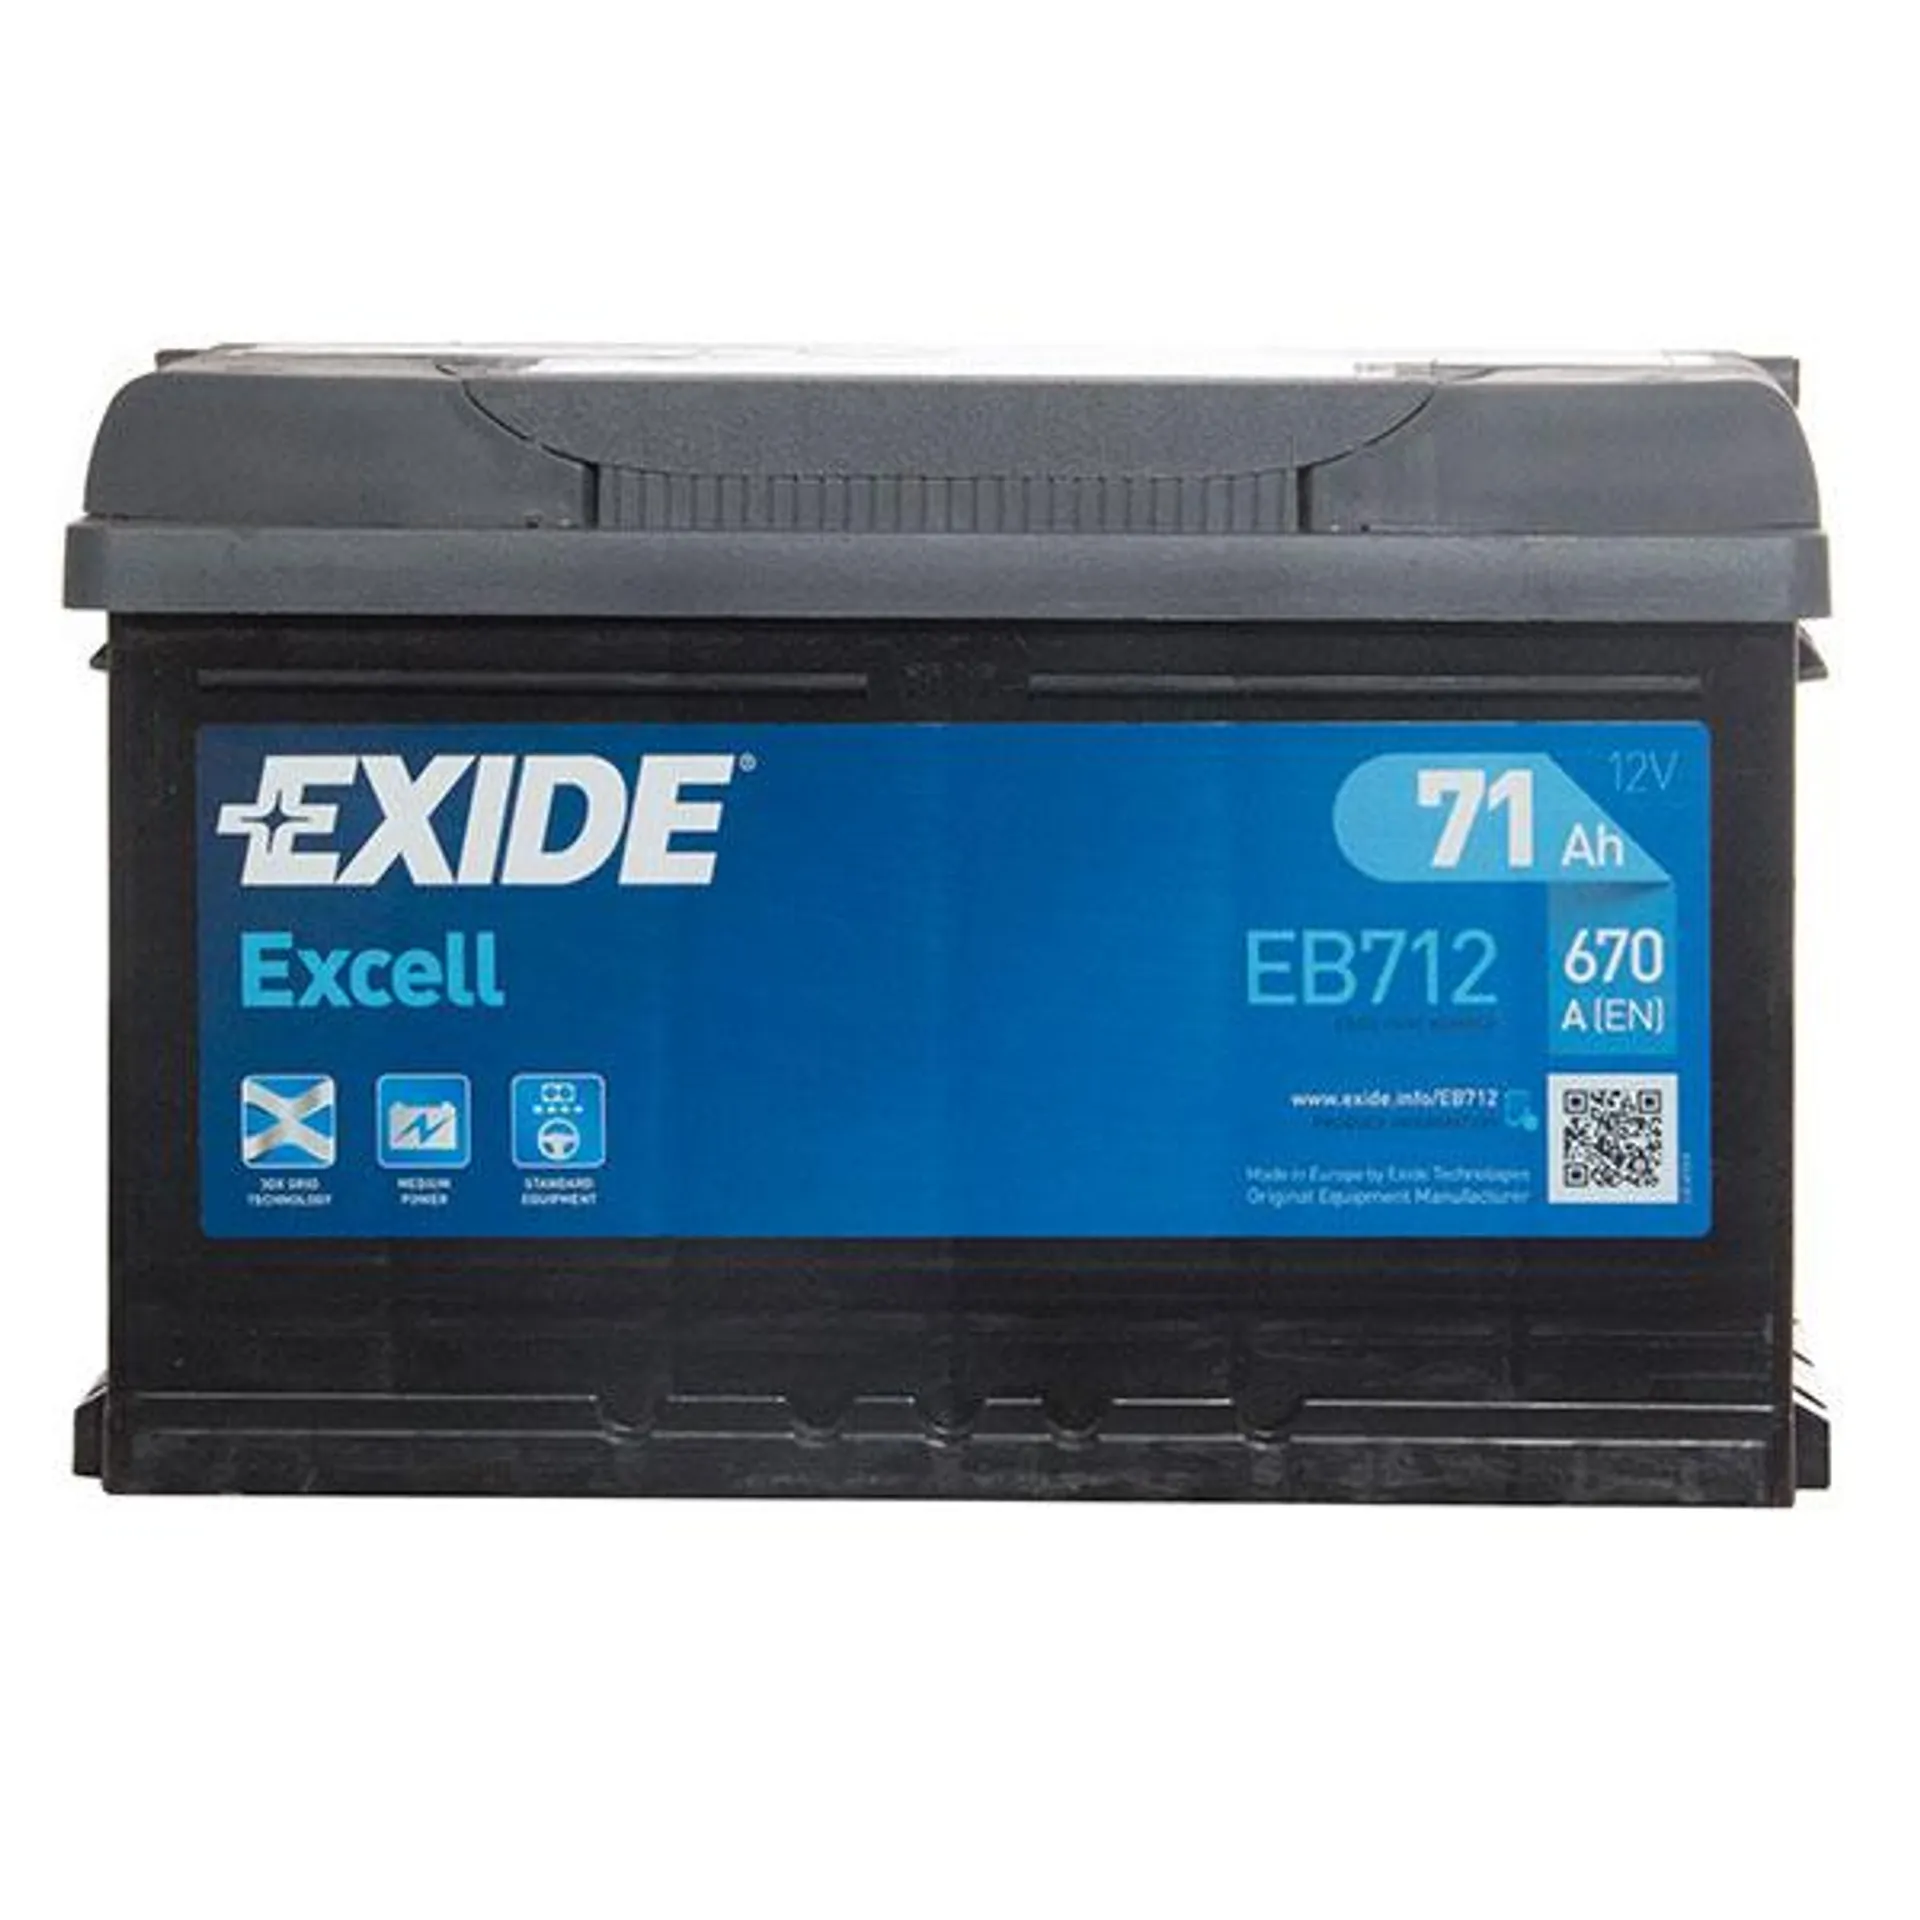 Exide Excel Car Battery 100 (71Ah) - 3 Year Guarantee - W096SE